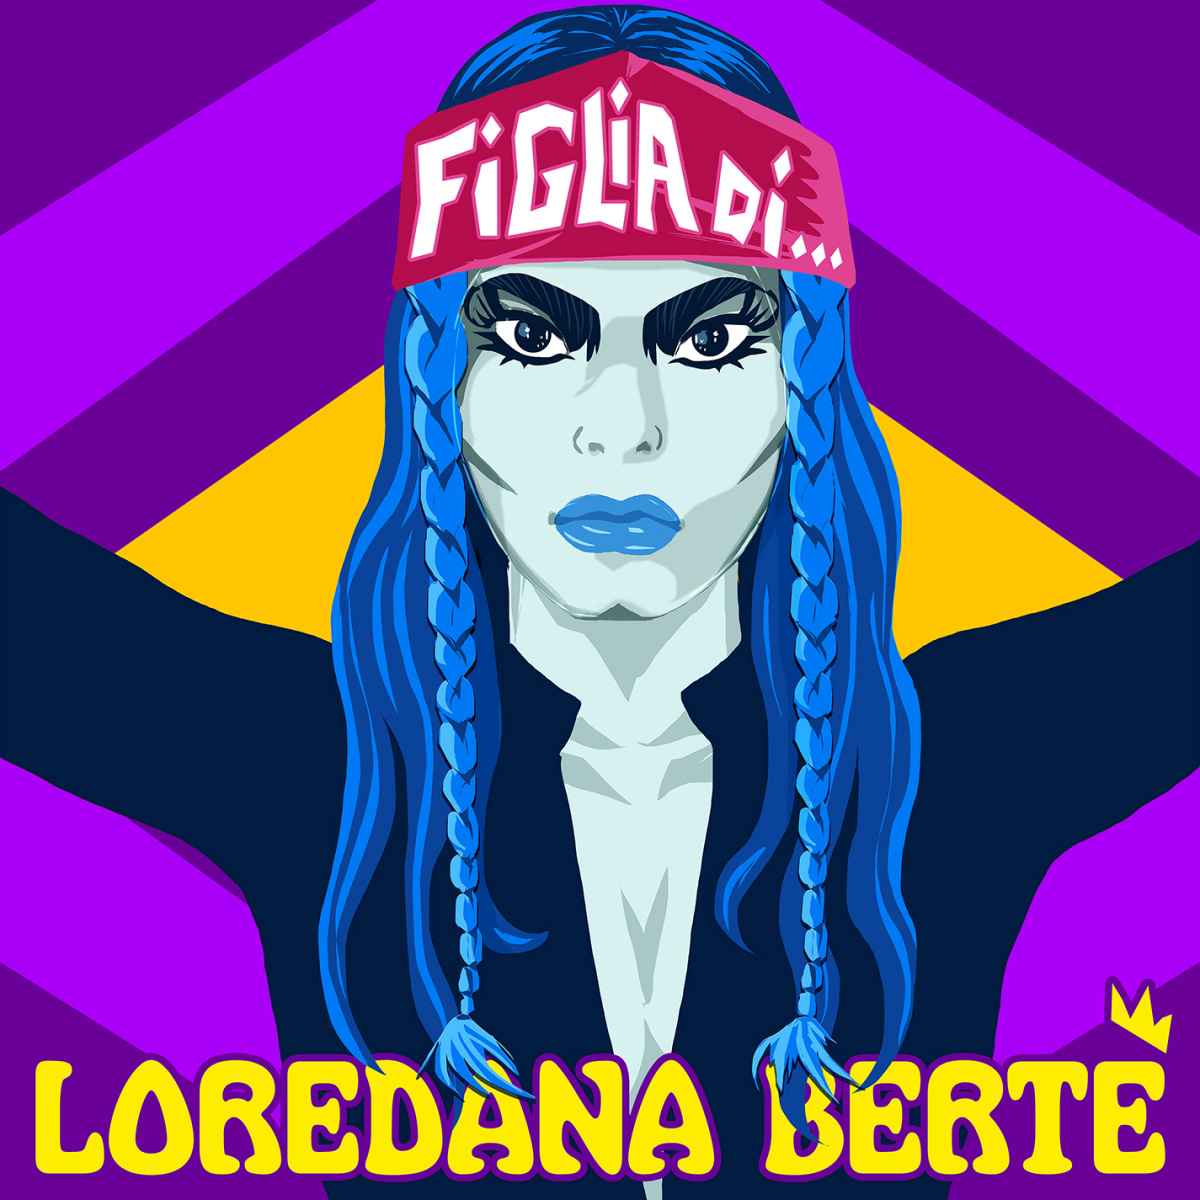 Loredana Berte - Figlia di... Noten für Piano